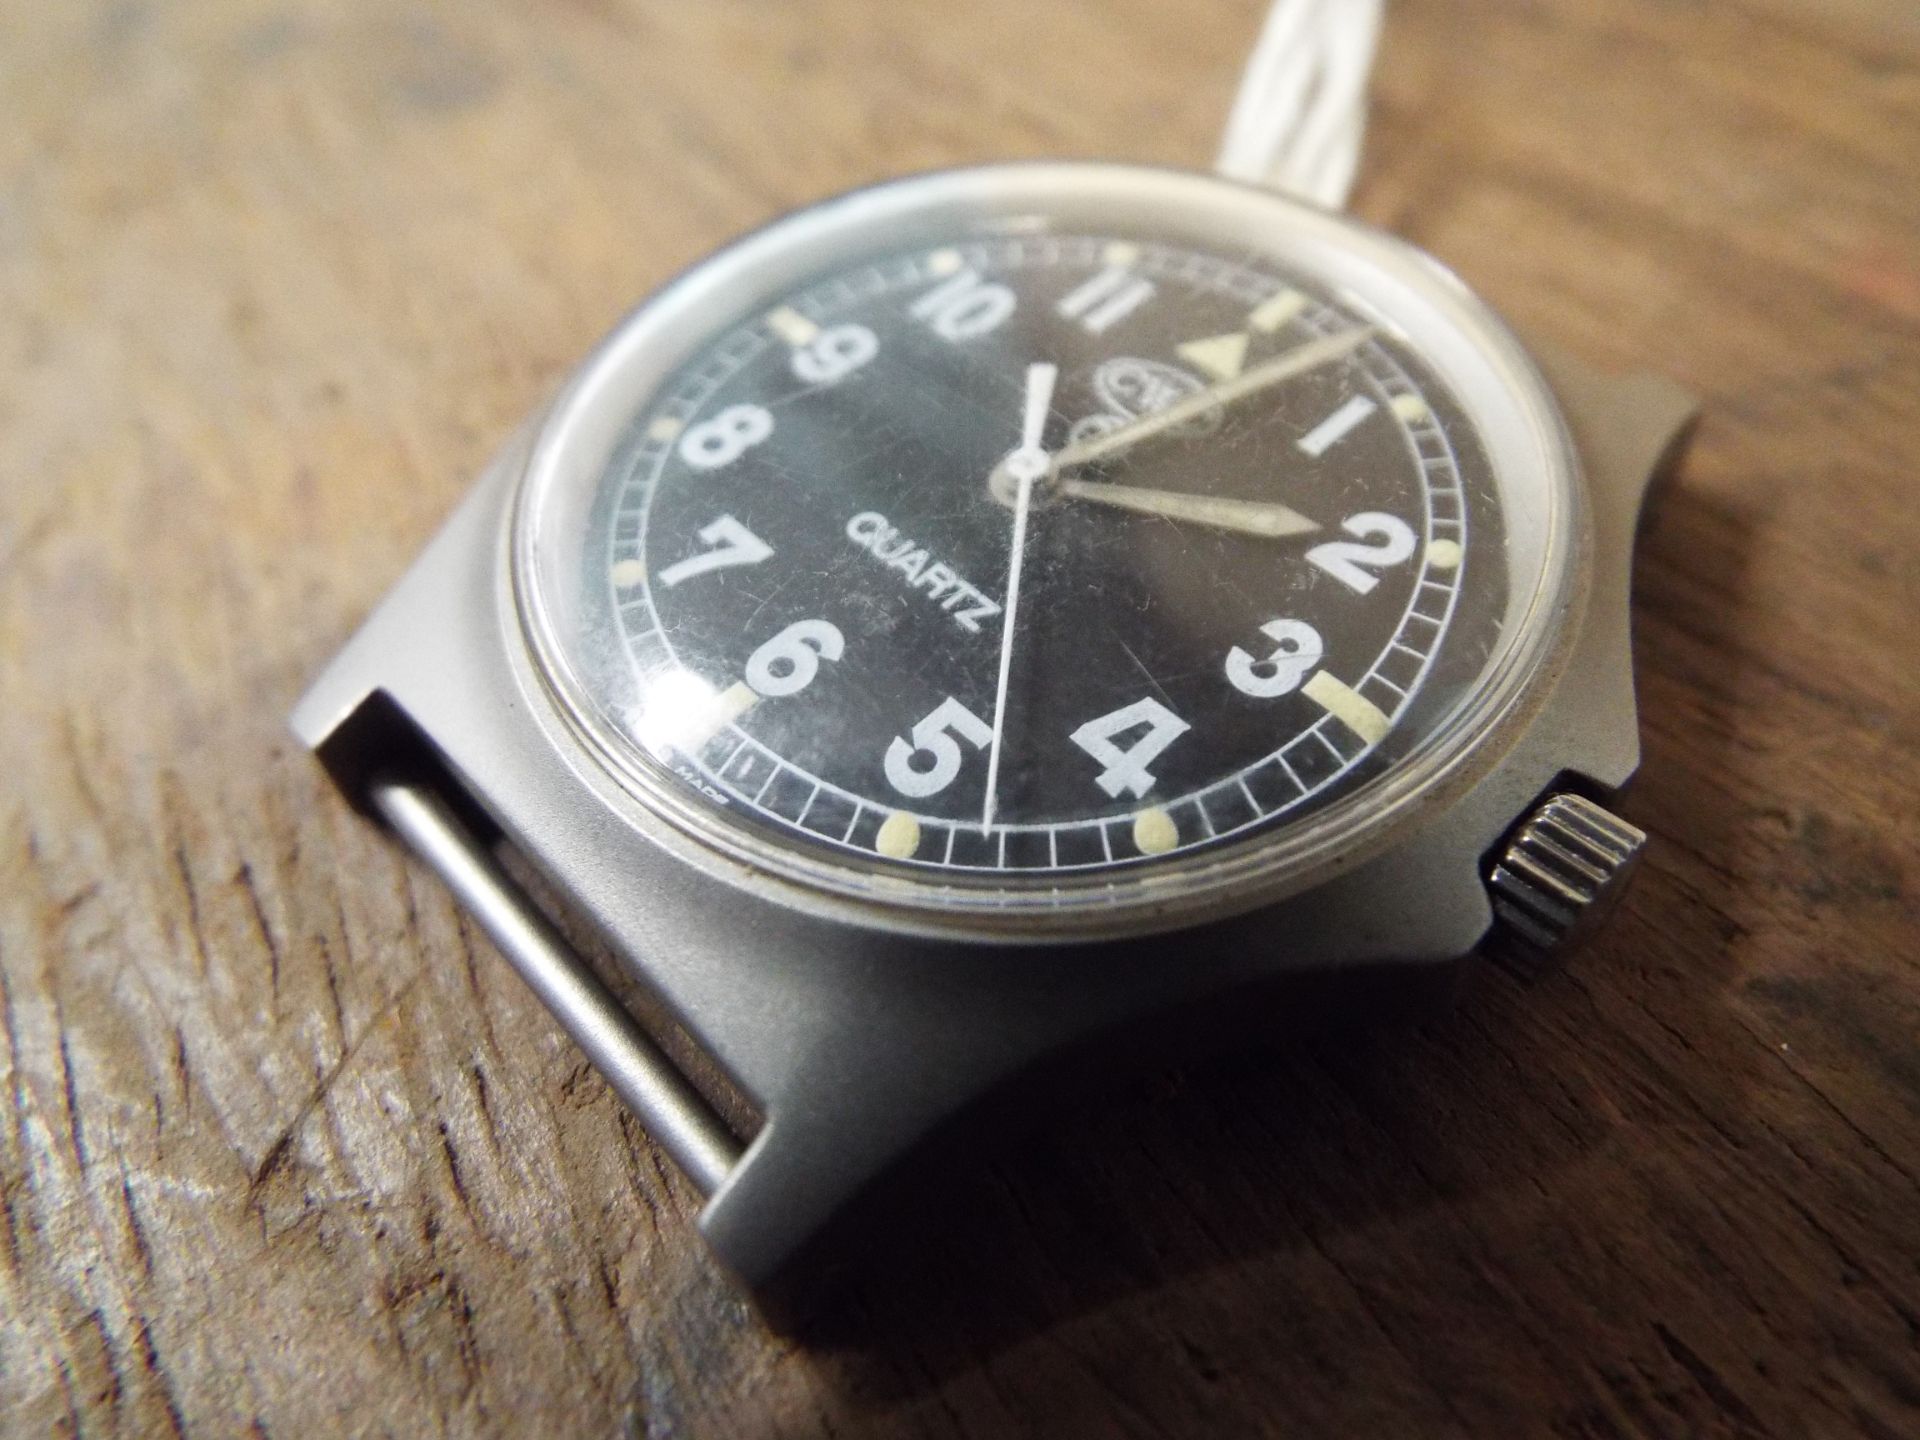 Genuine British Army,CWC quartz wrist watch - Image 2 of 4